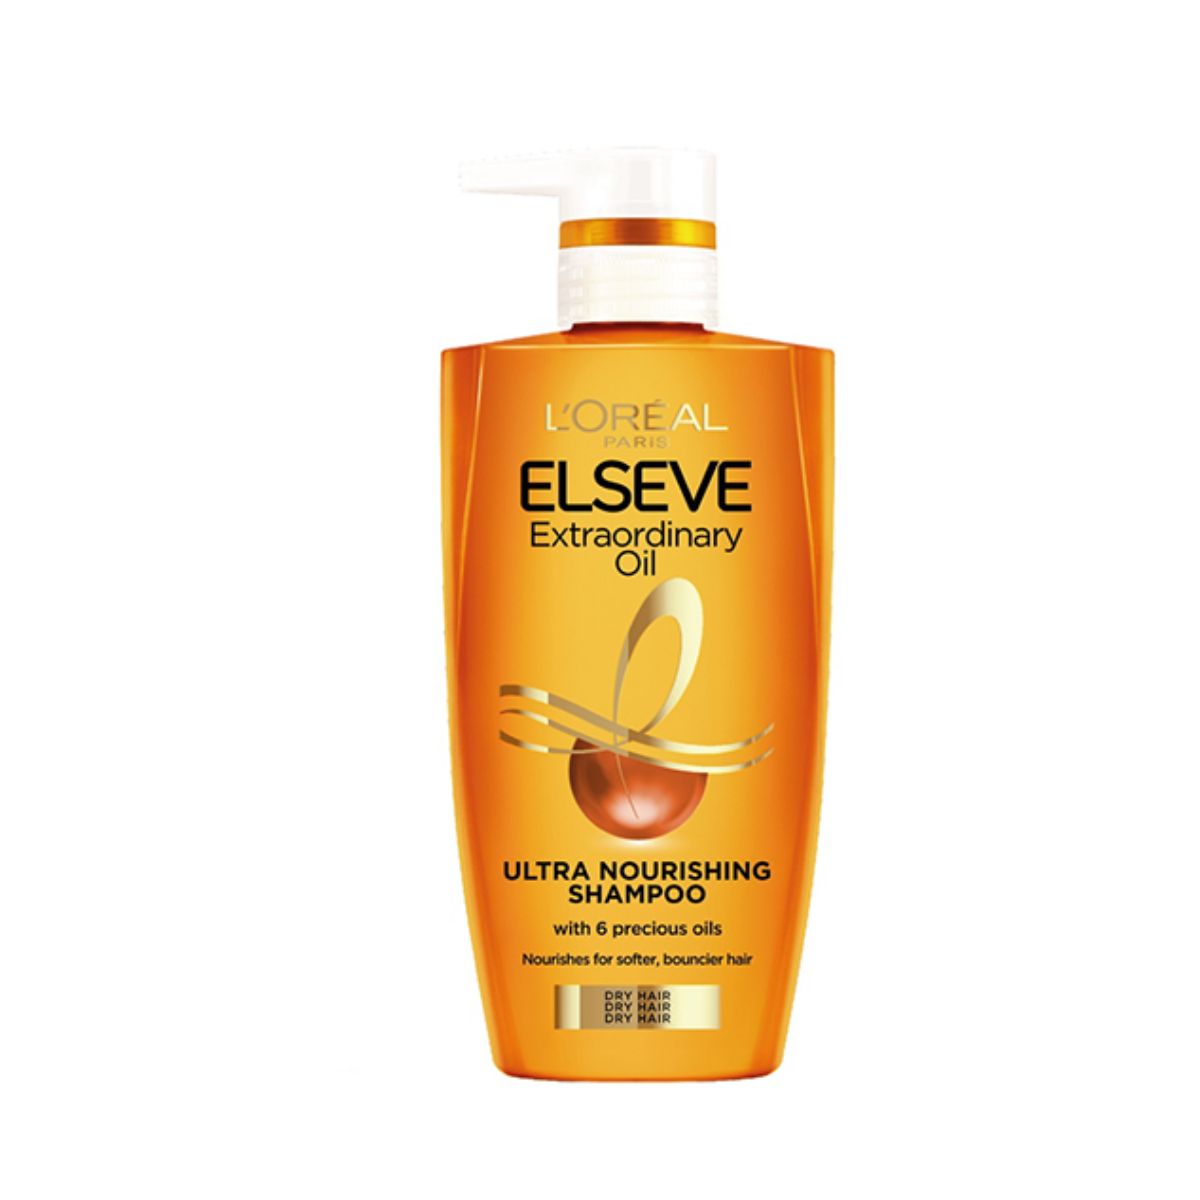 L'orealParis Elseve Extraordinary Oil - Ultra Nourishing Shampoo - 450ml